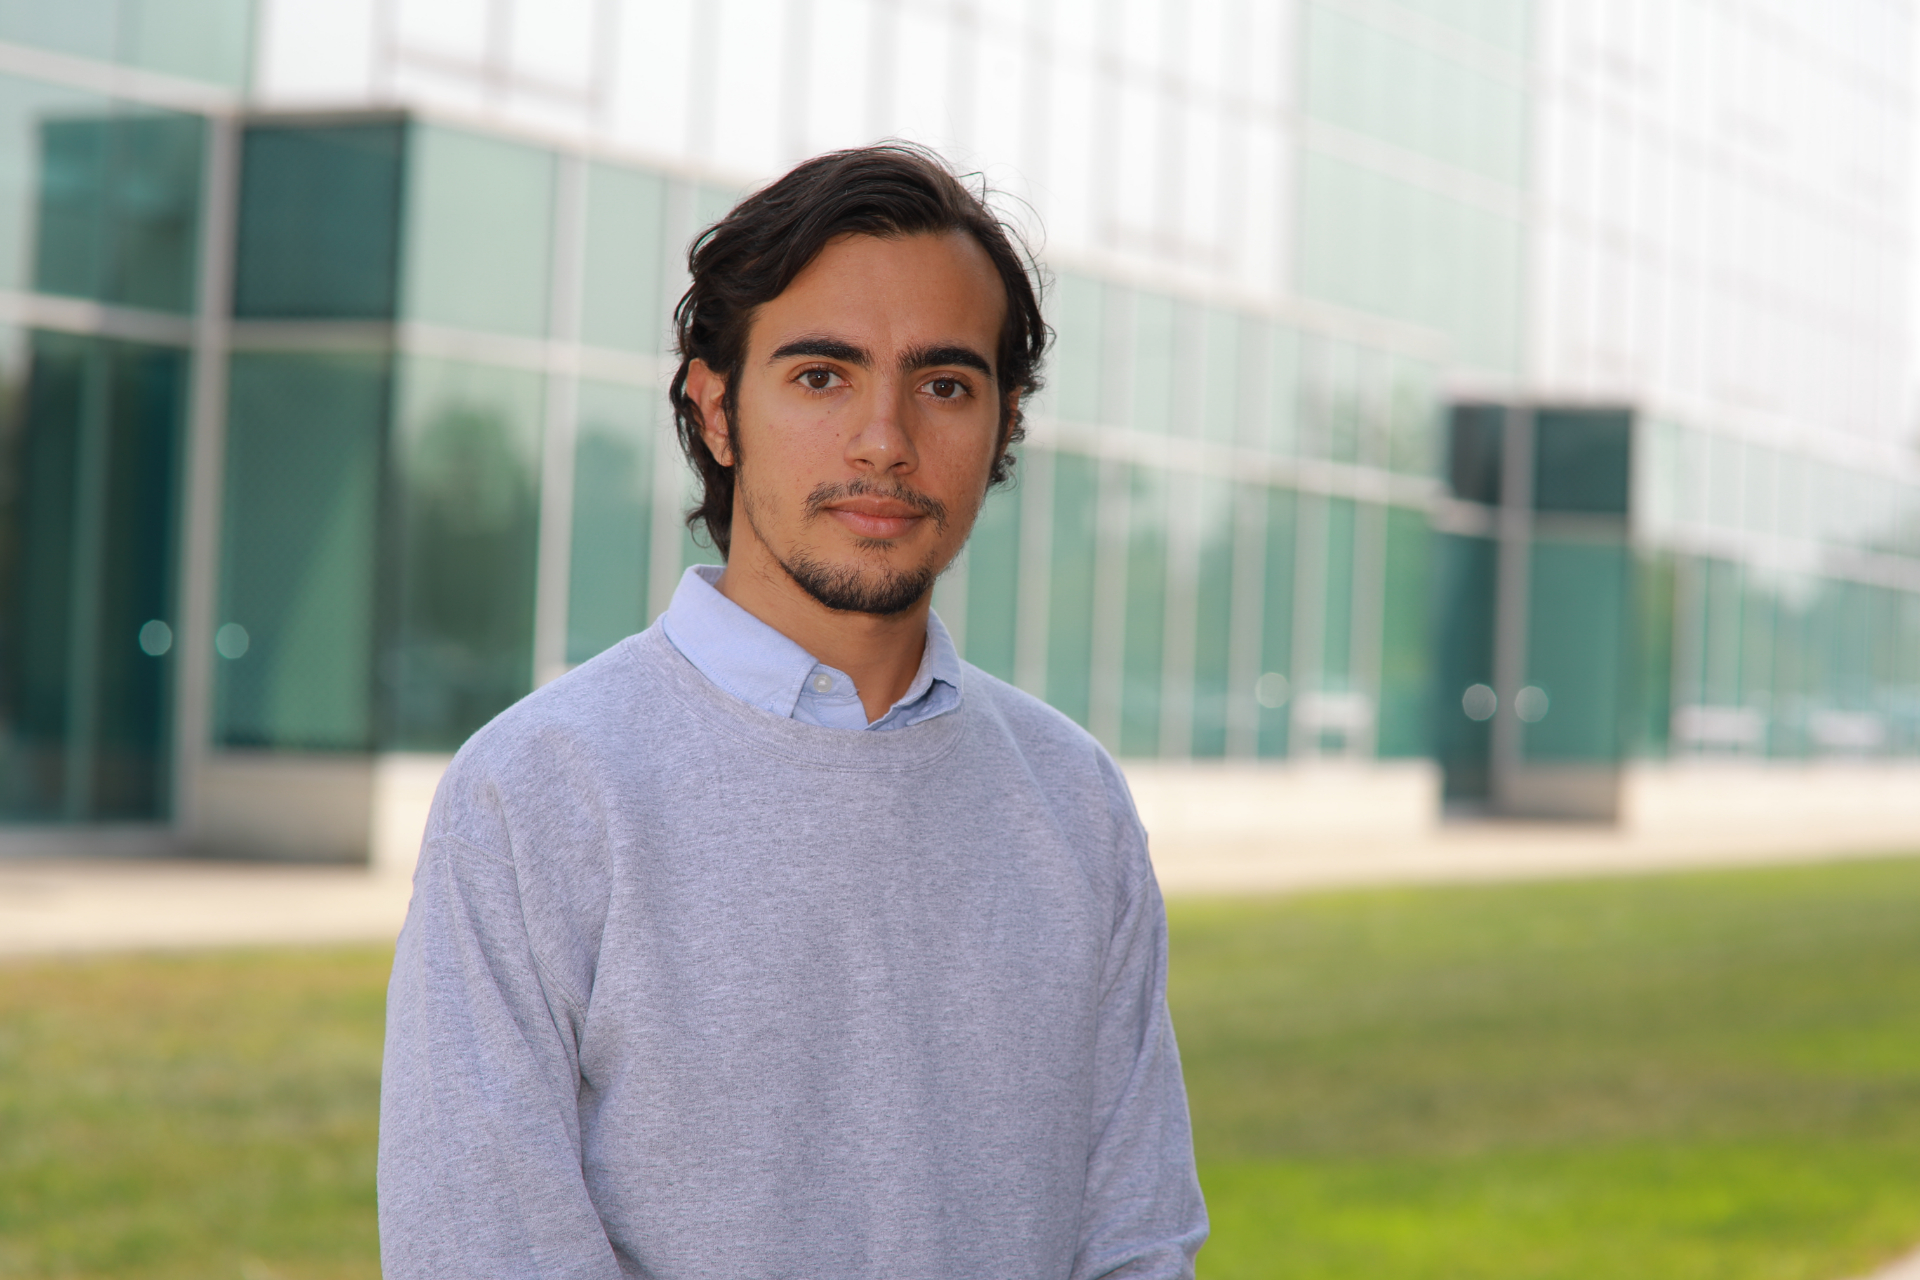 UToledo doctoral student Mohammadreza Nemati